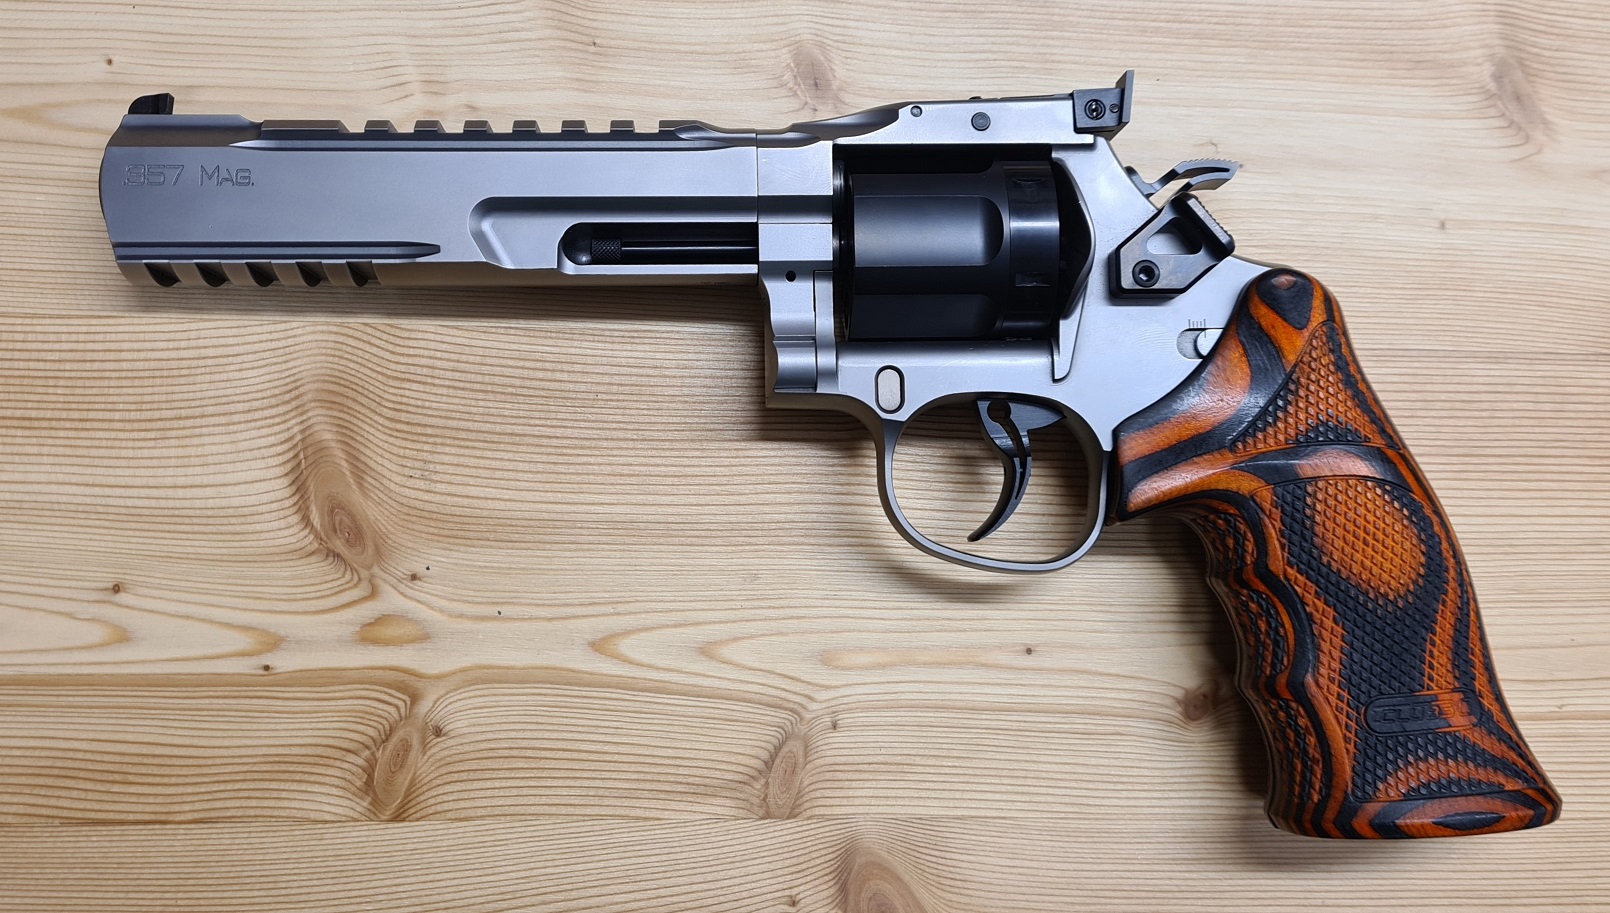 RL-Range Revolver .357 Mag. 6